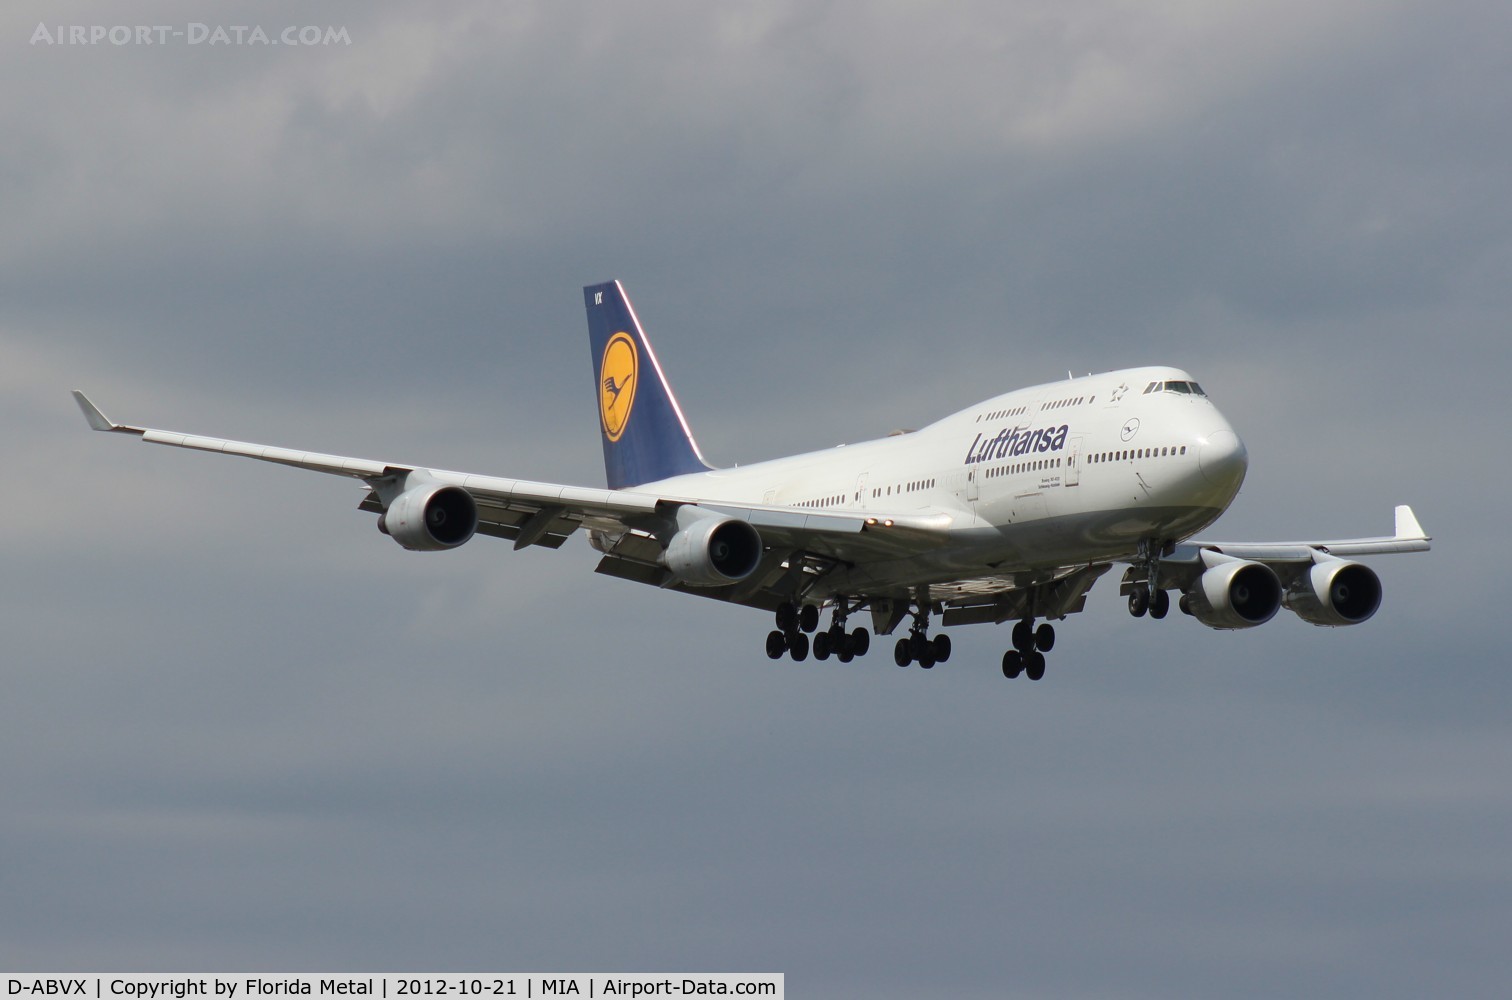 D-ABVX, 1999 Boeing 747-430 C/N 29868, Lufthansa 747-400